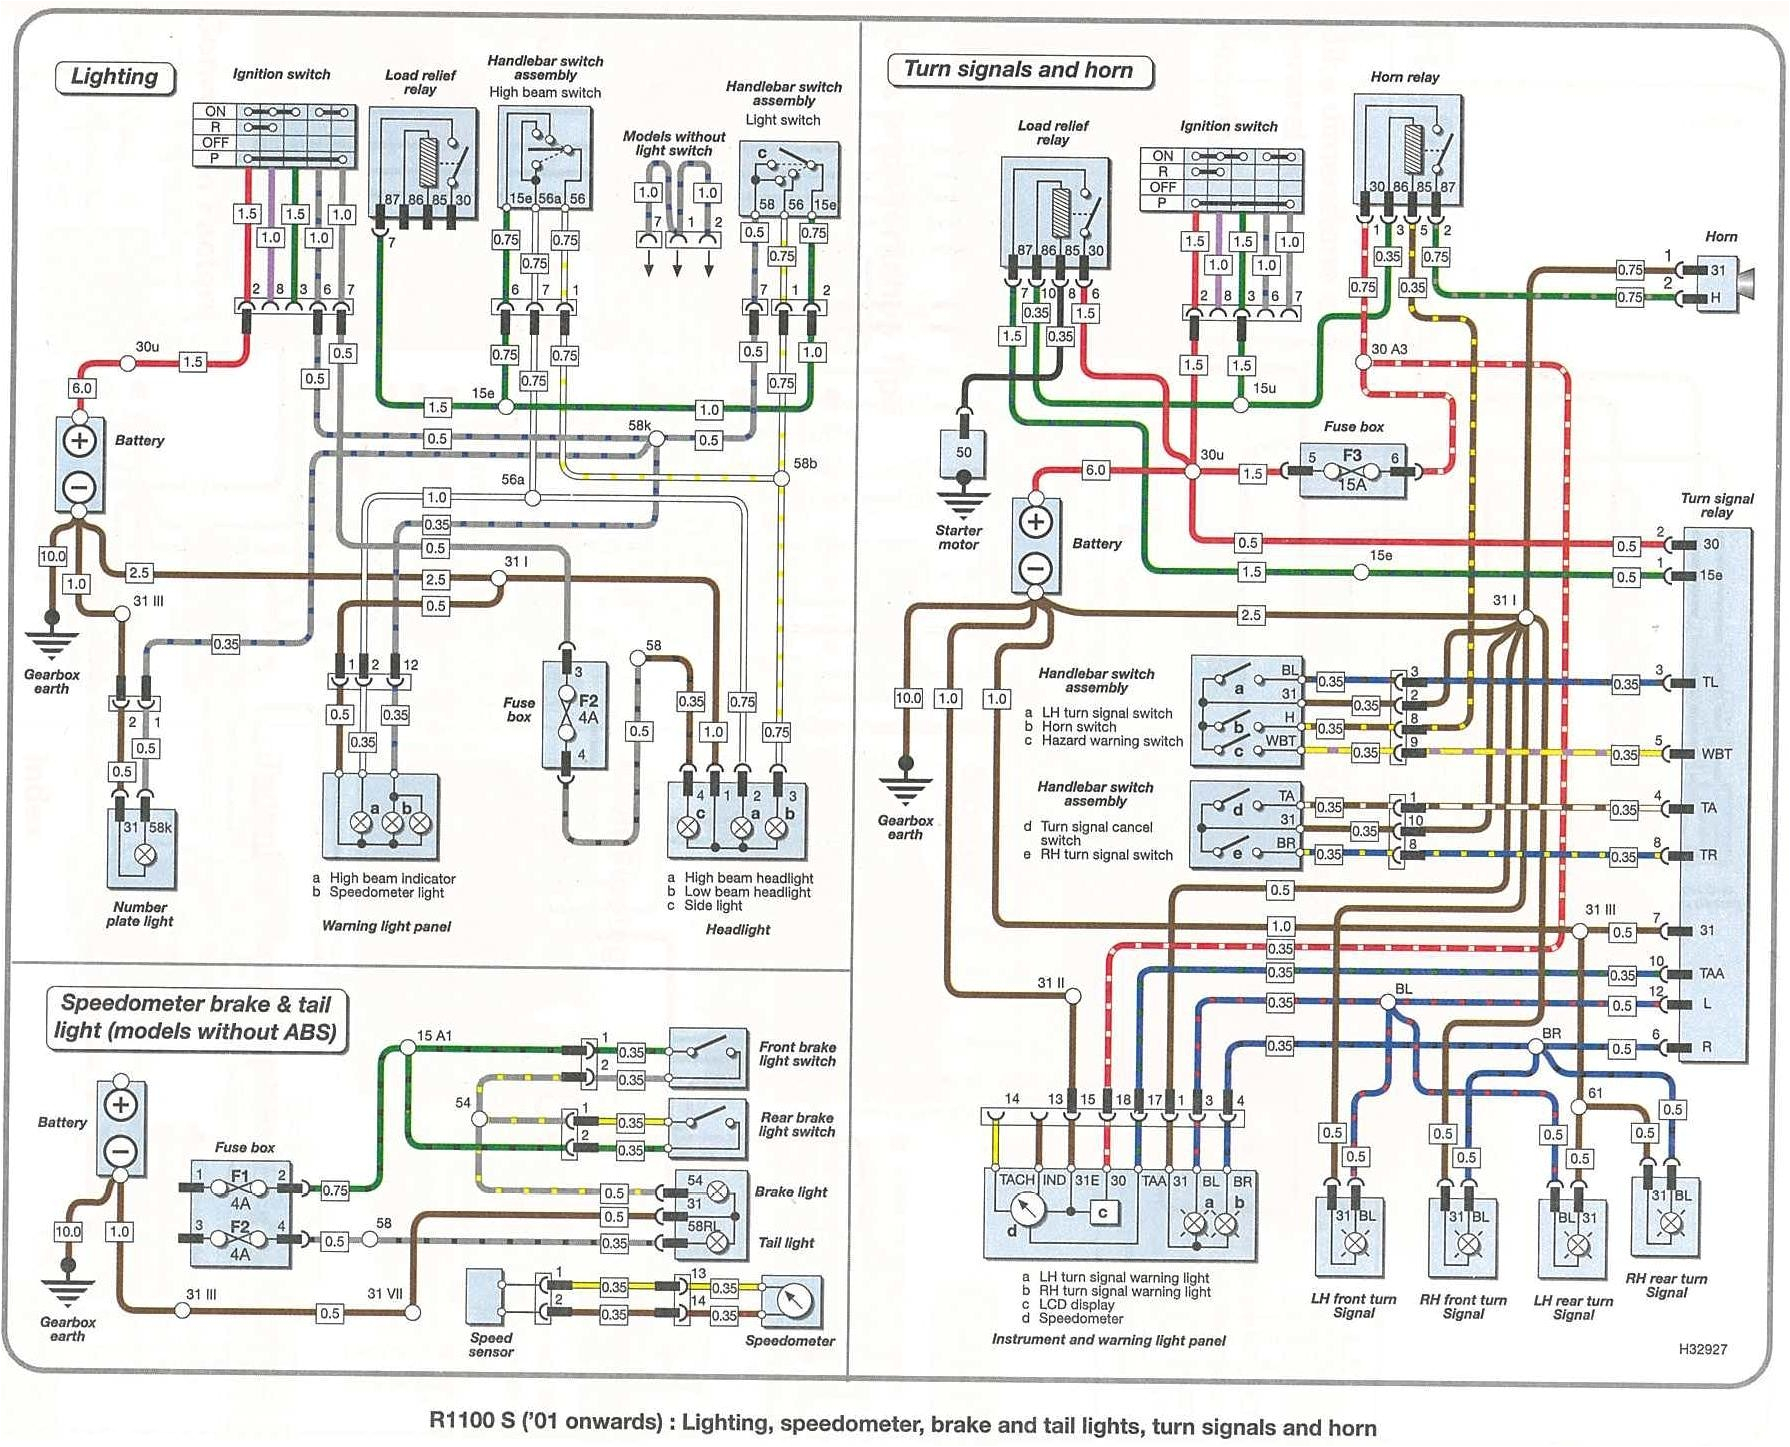 bmw r1150rt wiring diagram download wiring diagram tagsbmw r1150rt wiring diagram download wiring diagram expert bmw